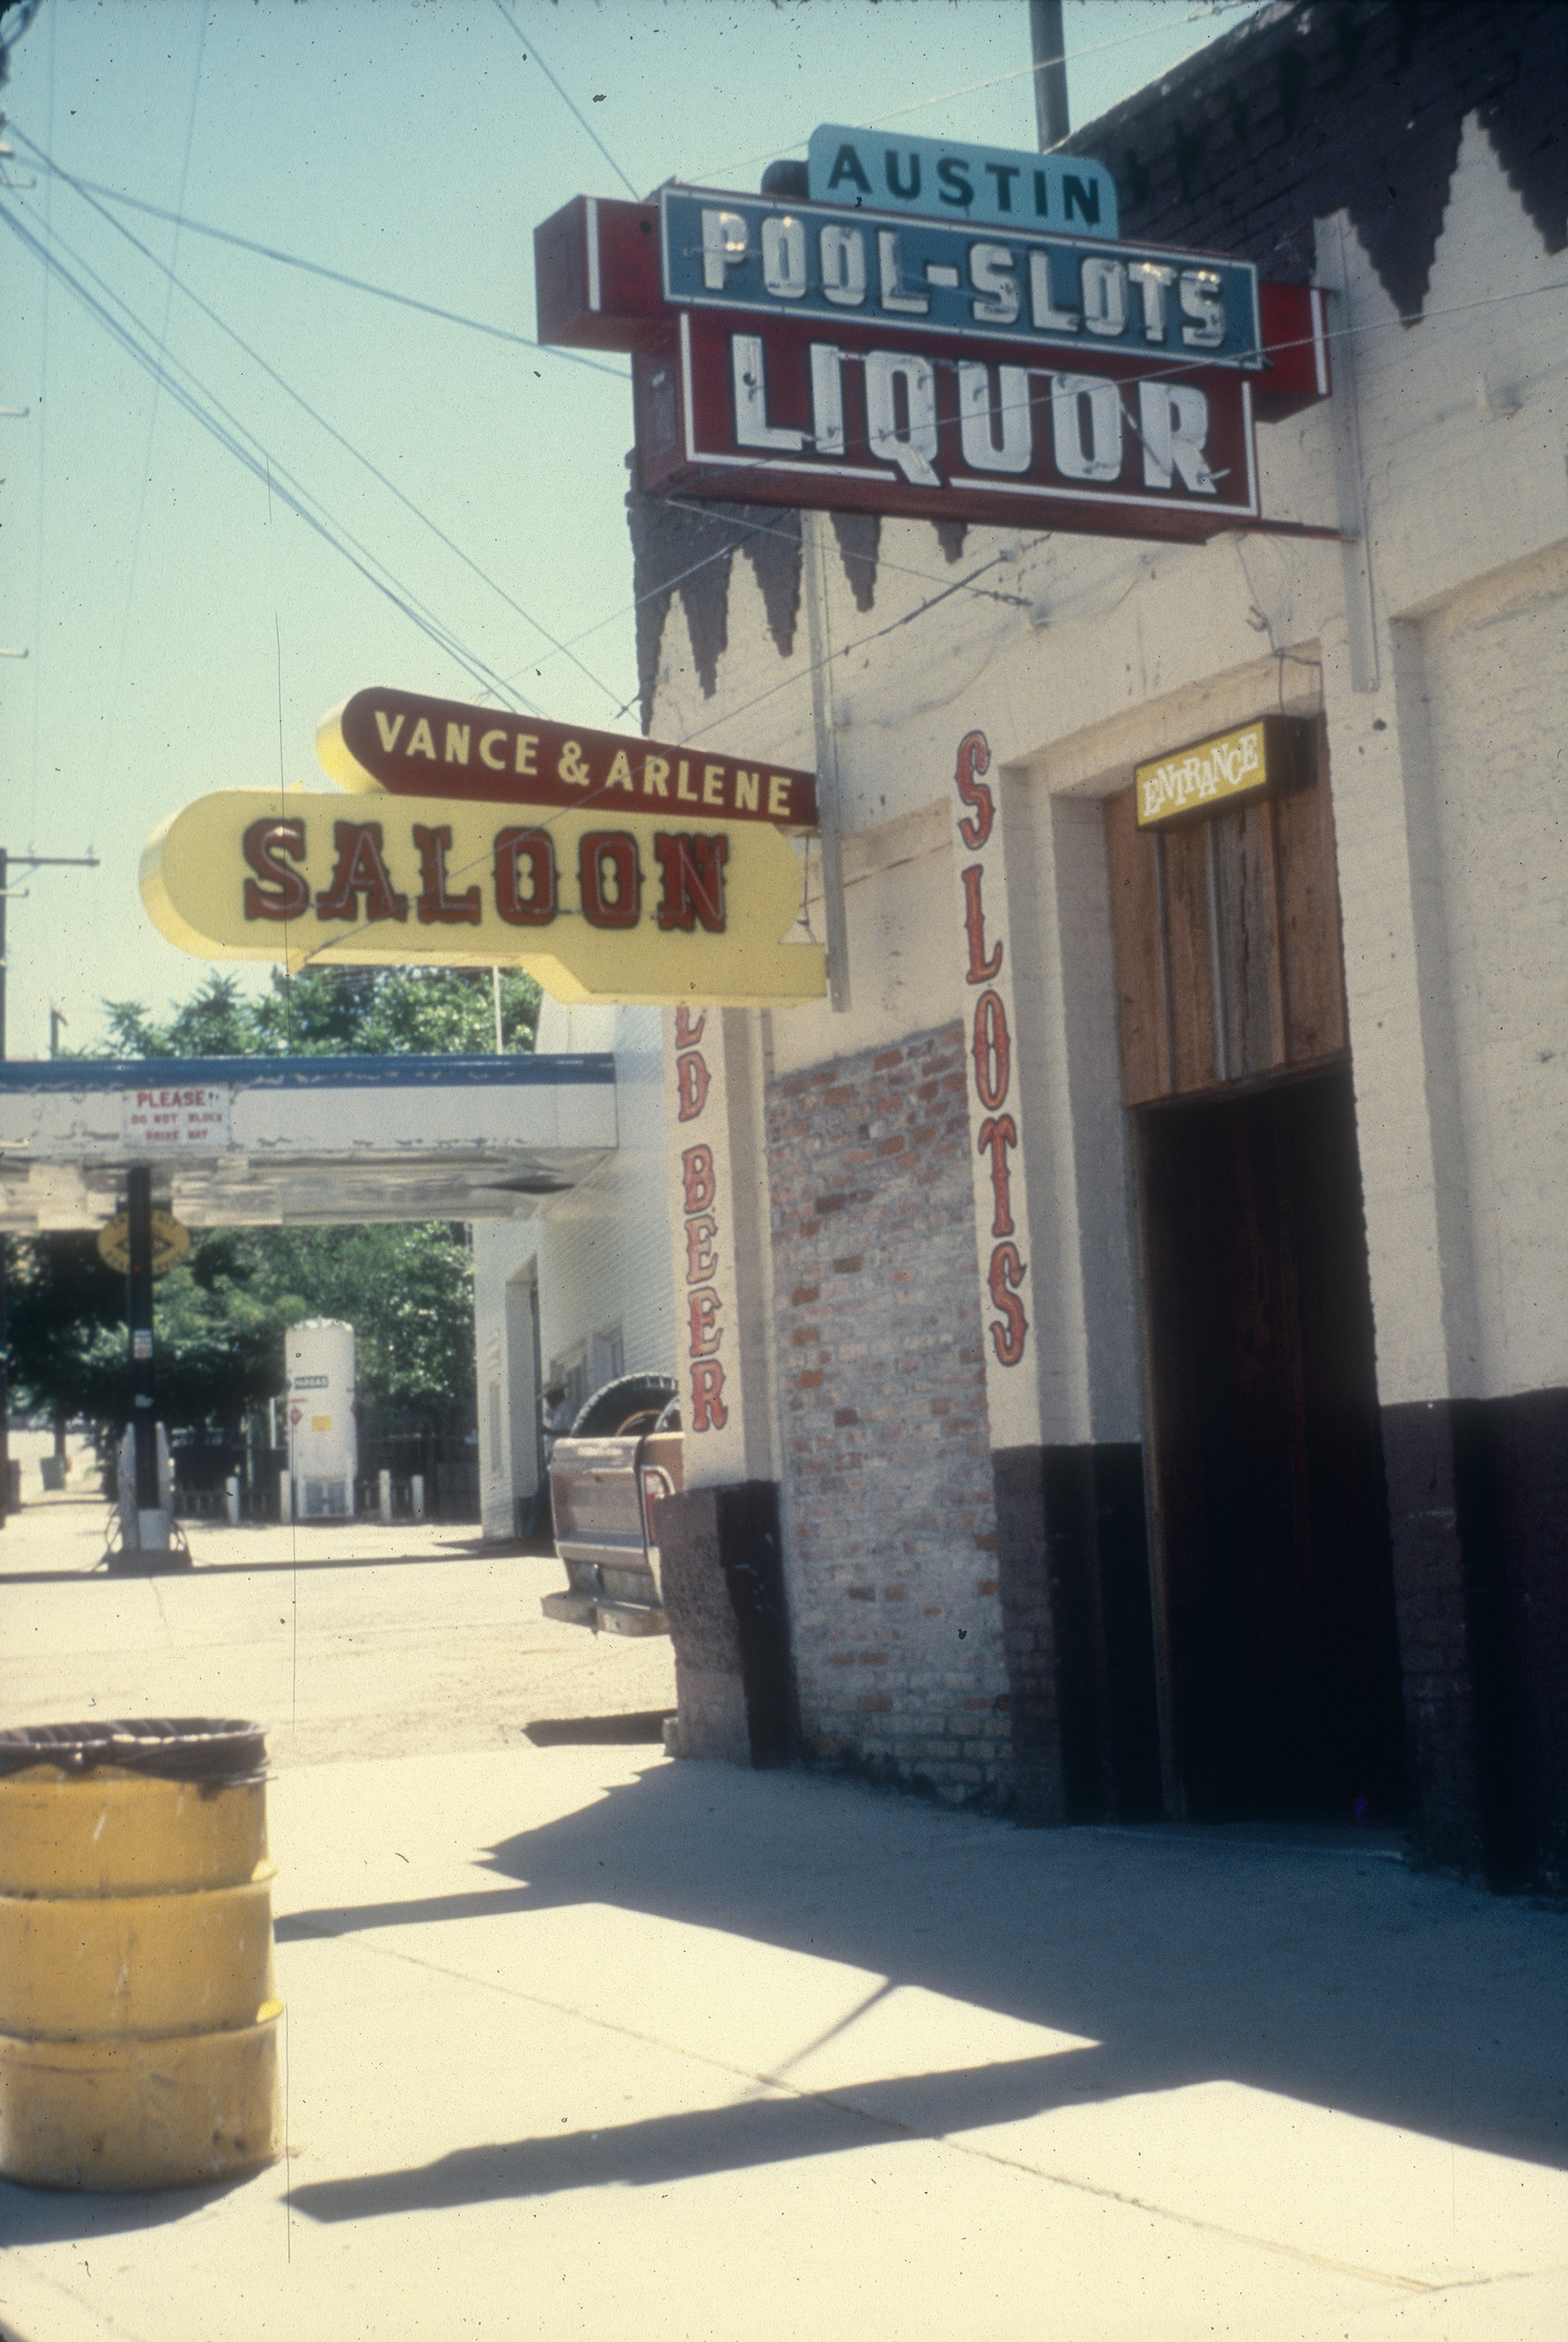 Slide of Austin Pool and Slots, Austin, Nevada, 1986